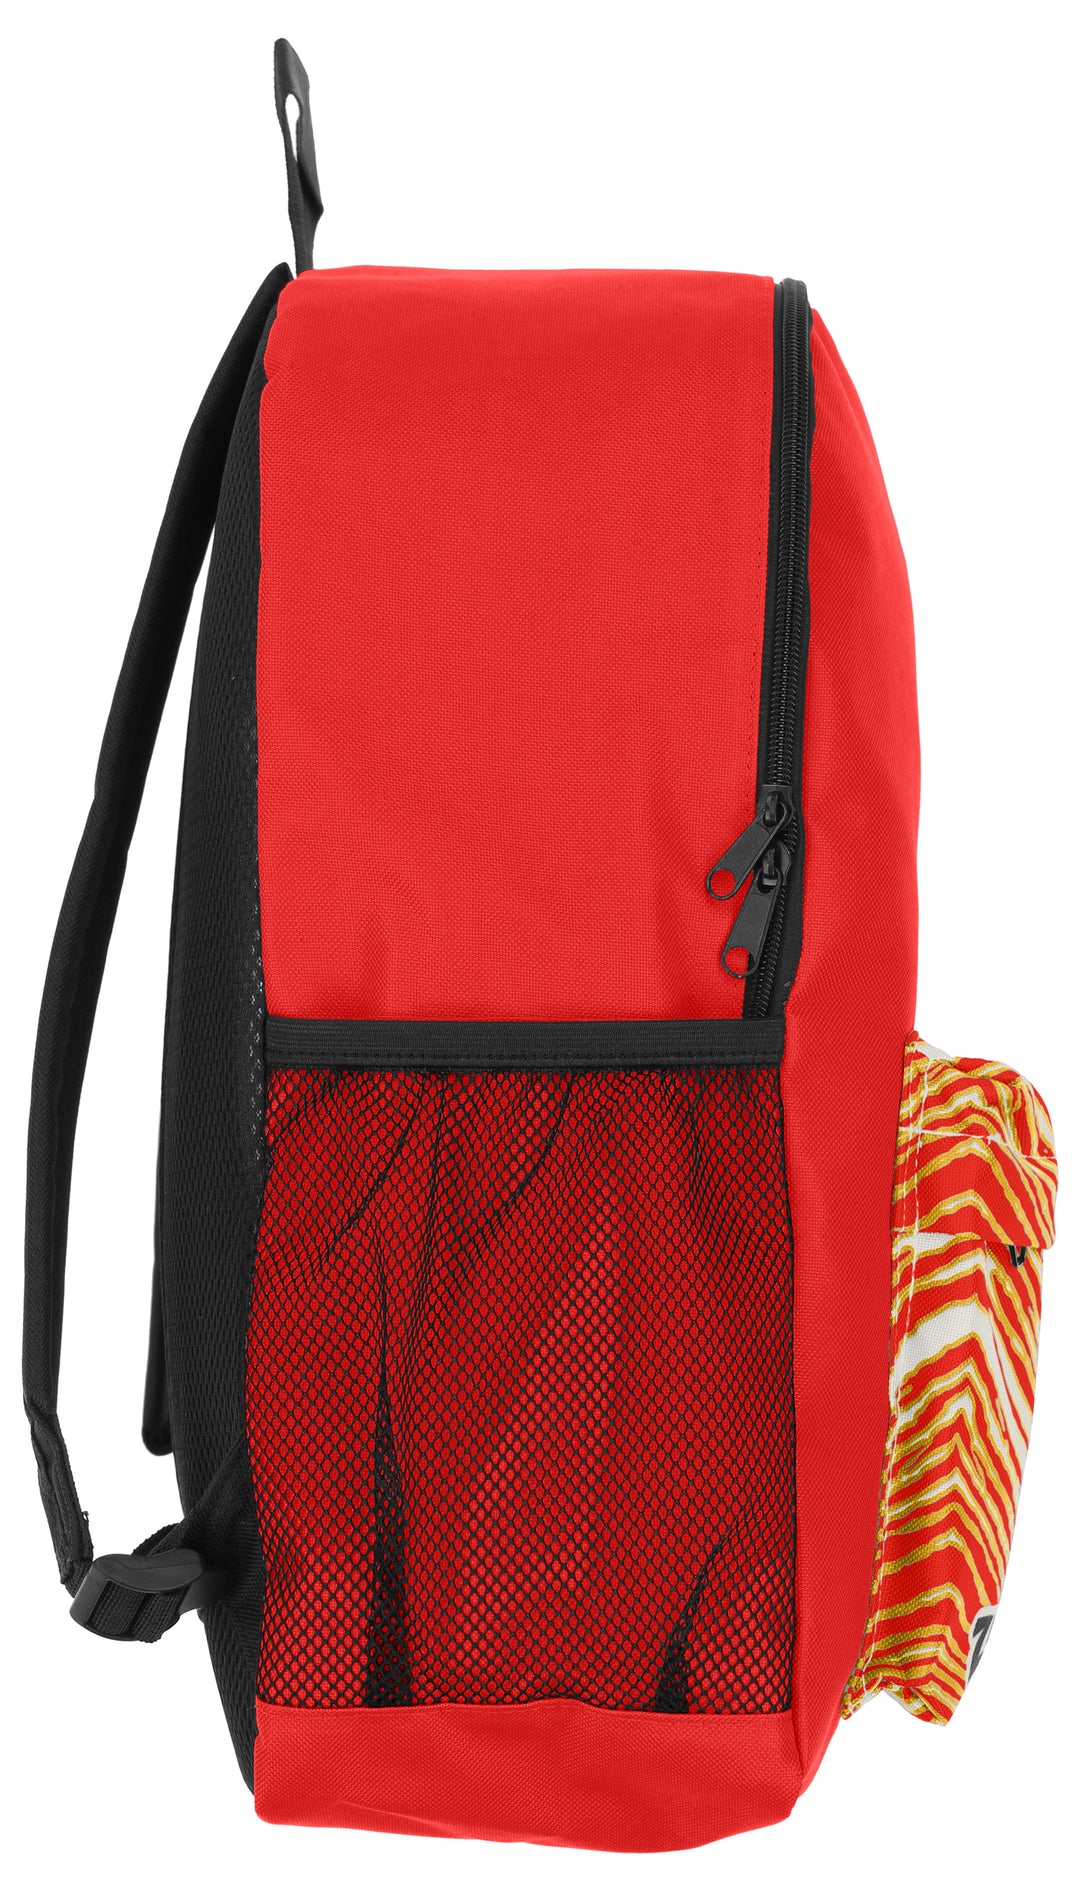 FOCO X ZUBAZ NFL Kansas City Chiefs Zebra 2 Collab Printed Backpack